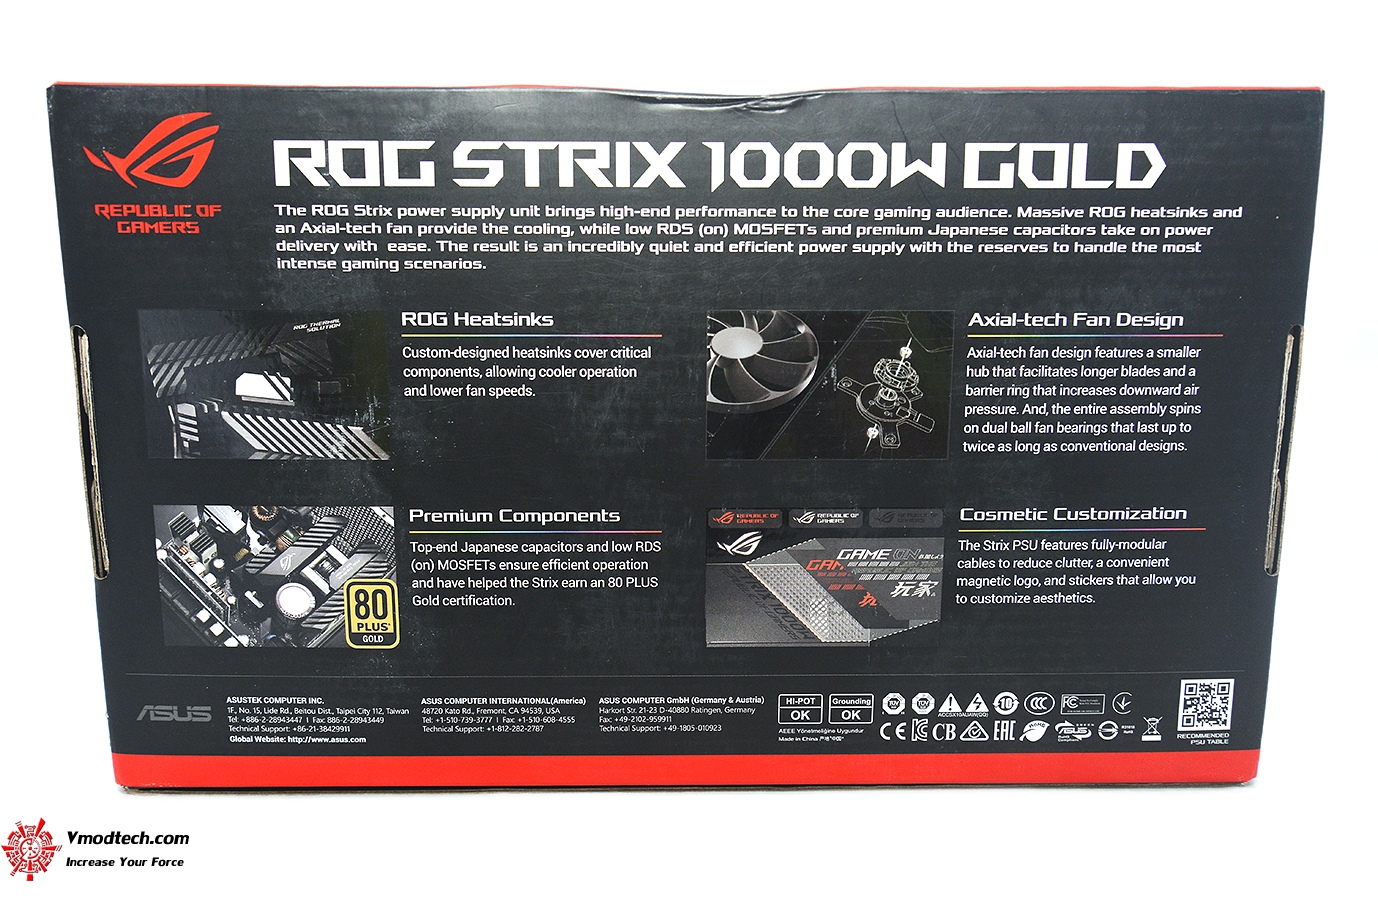 dsc 2660 ASUS ROG Strix 1000W Gold PSU Review